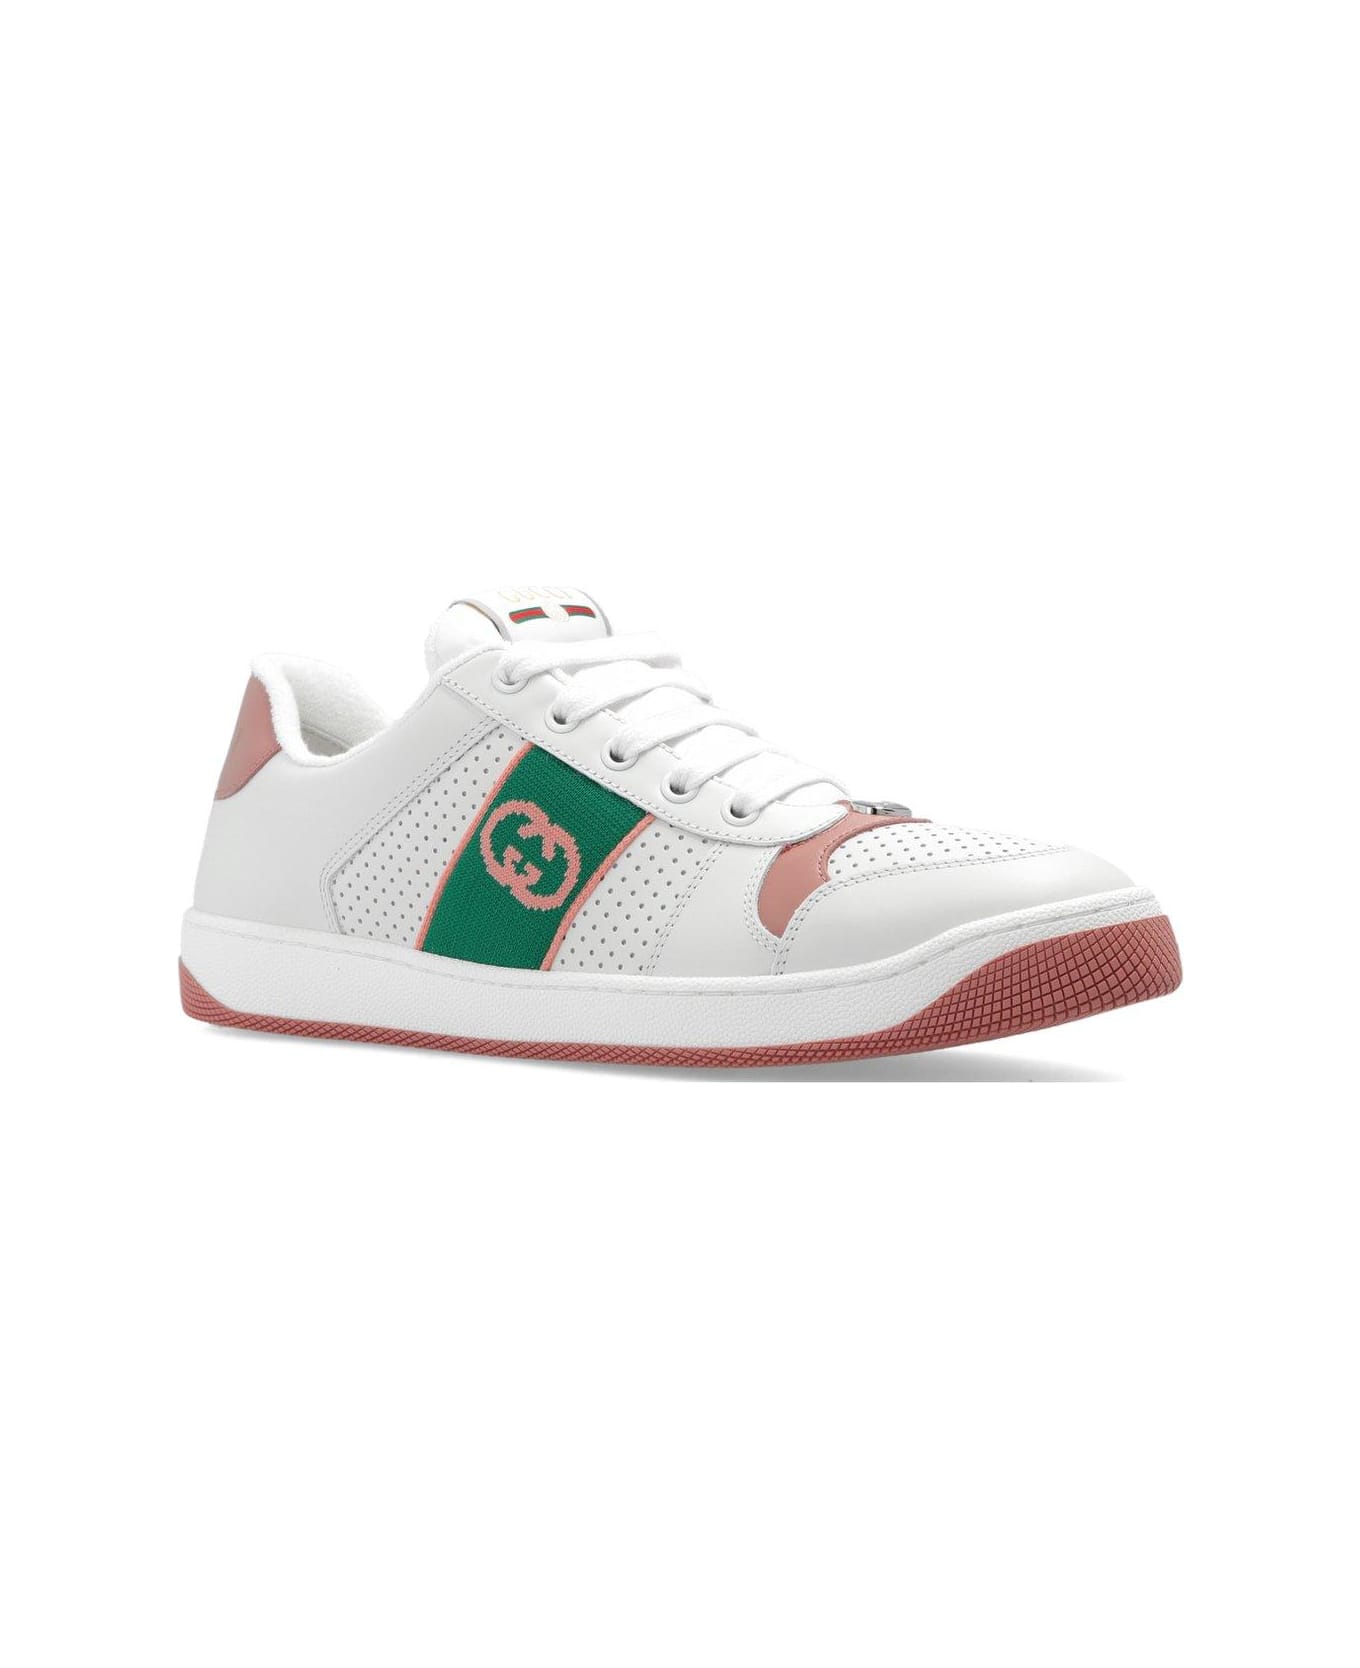 Gucci Screener Low-top Sneakers - White